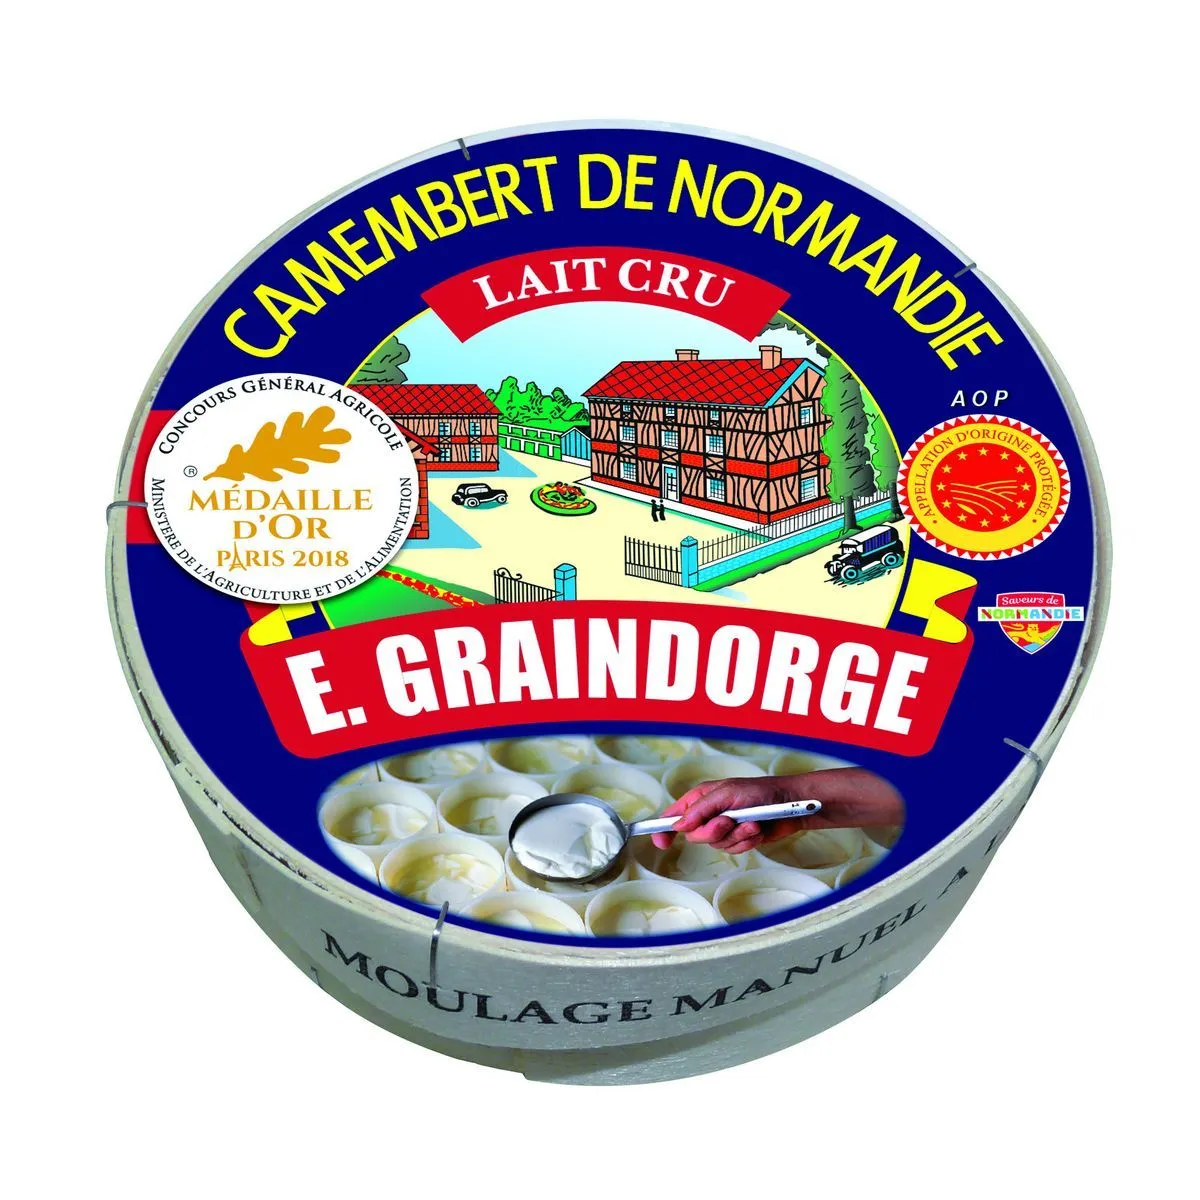 camembert de normandie e. graindorge aop